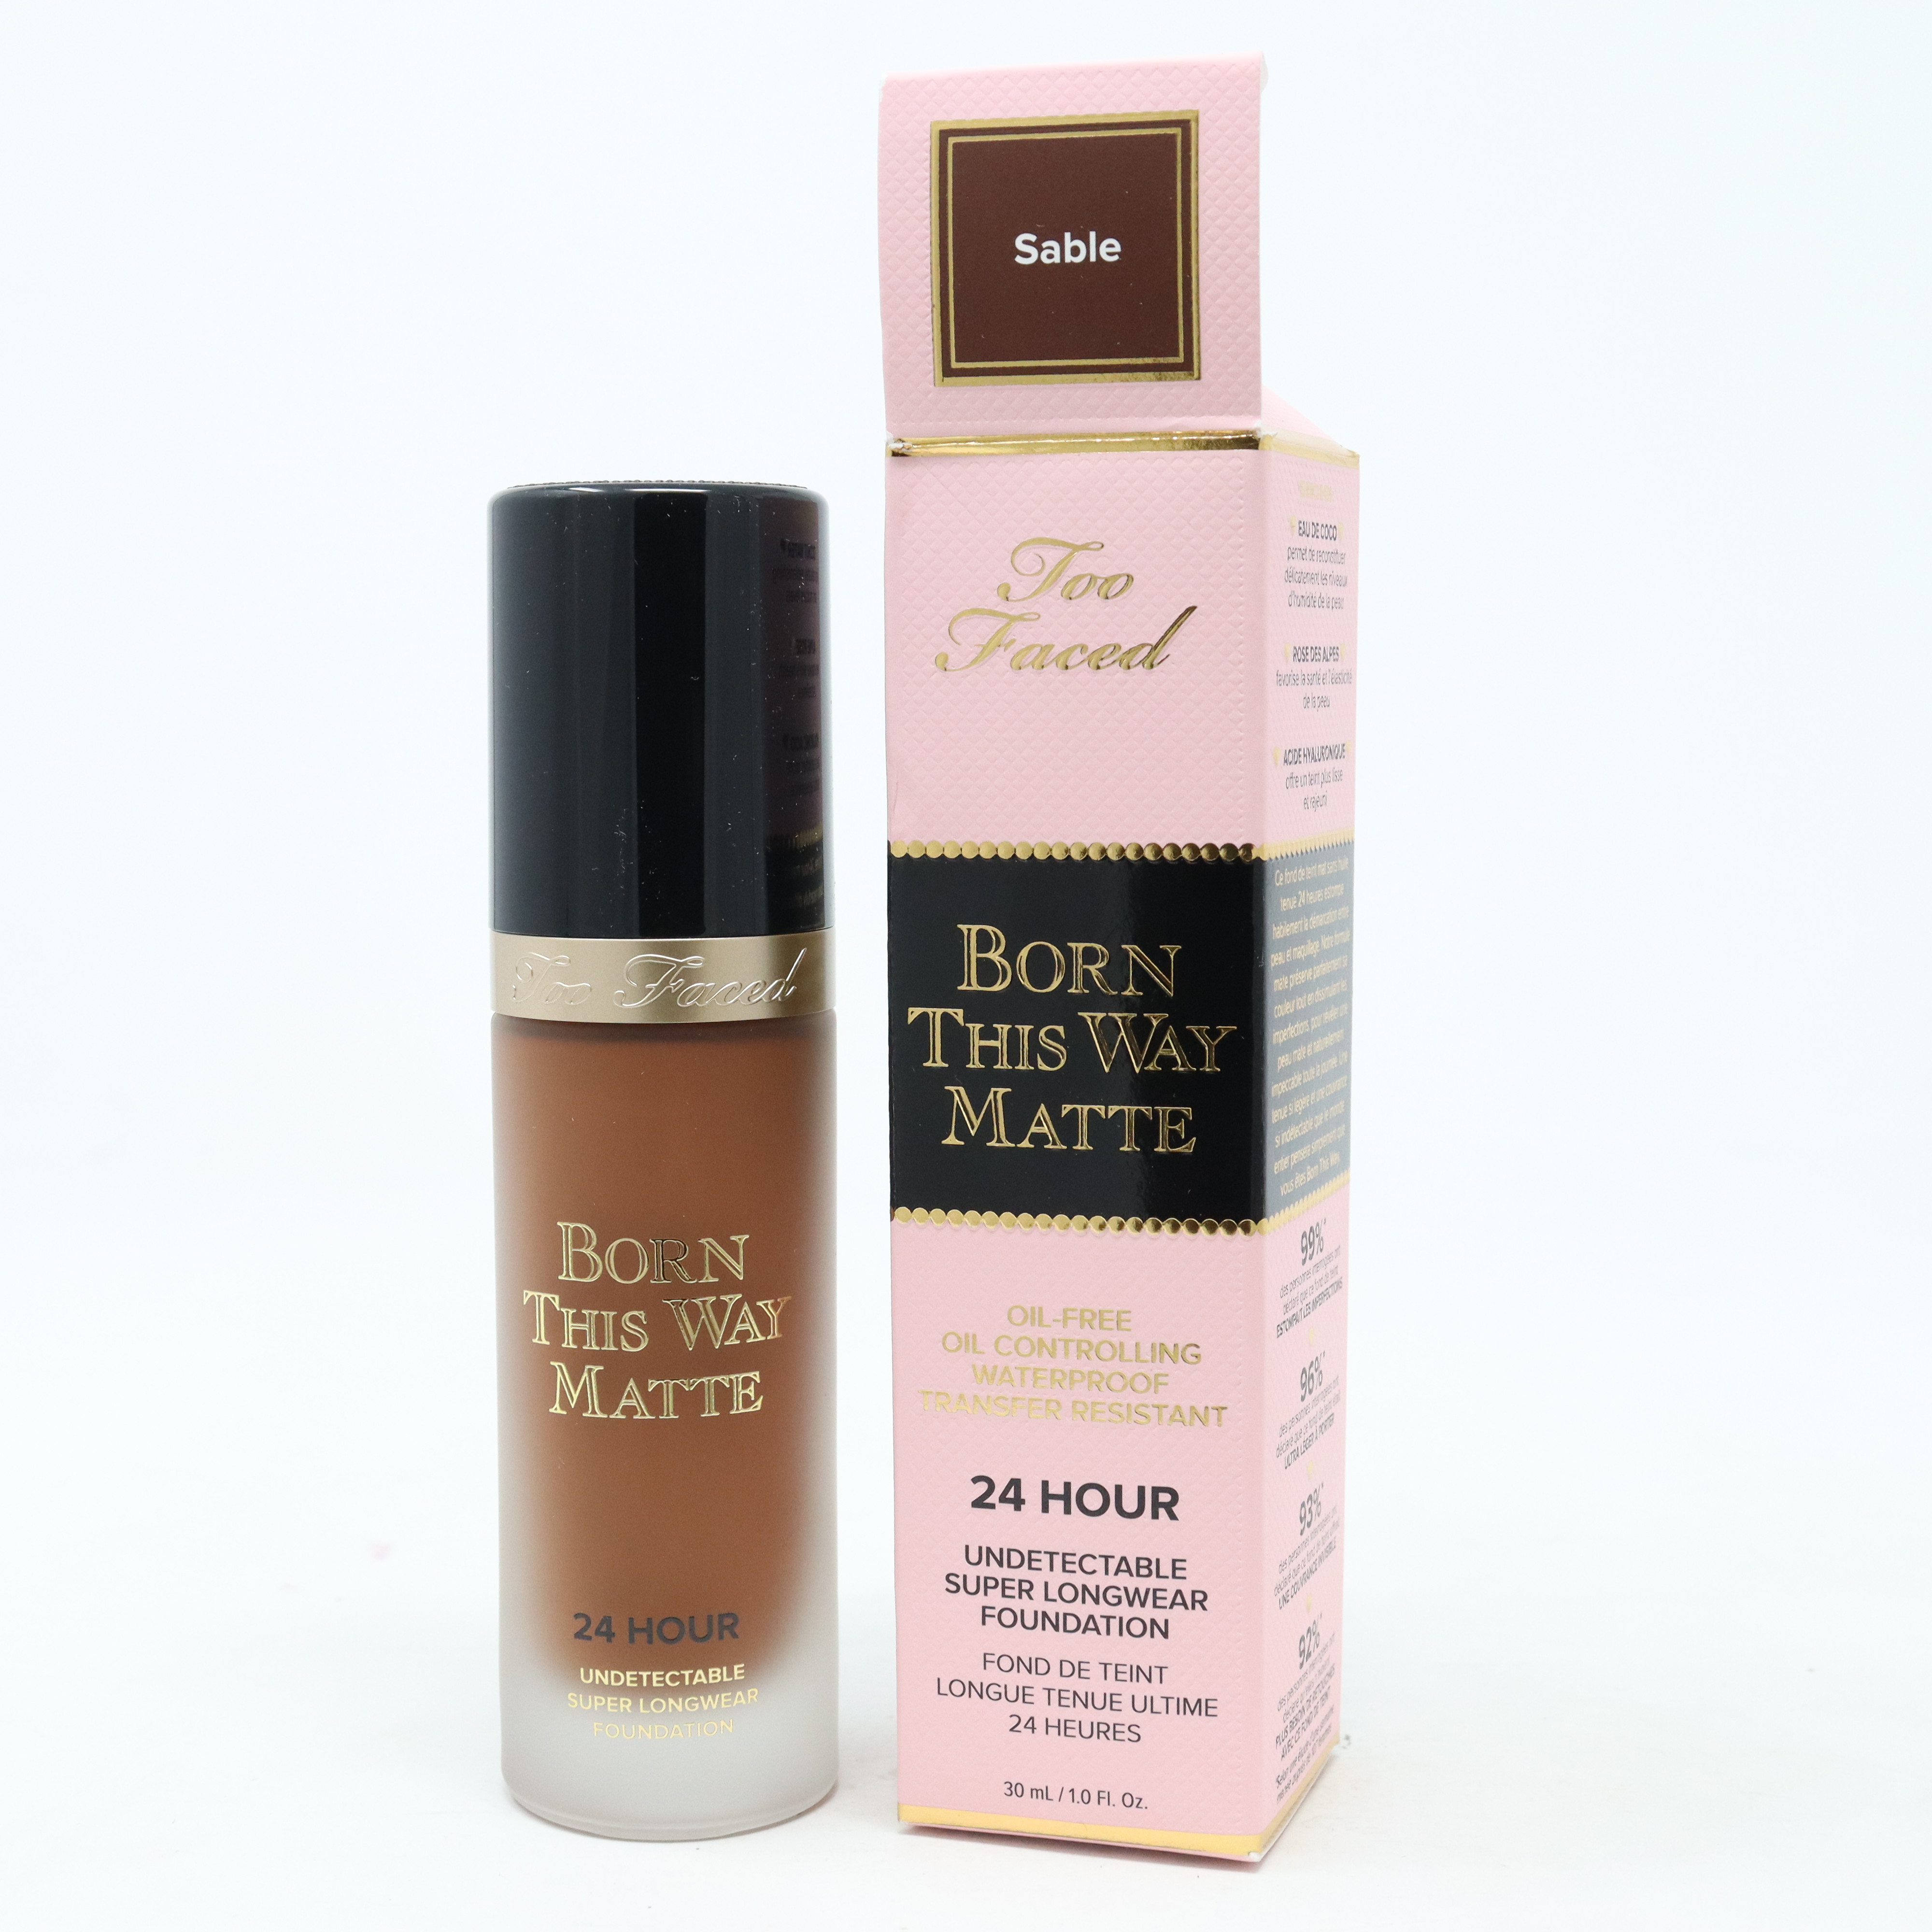 Les Sables Roses Louis Vuitton for women and men – Island Perfume Bar